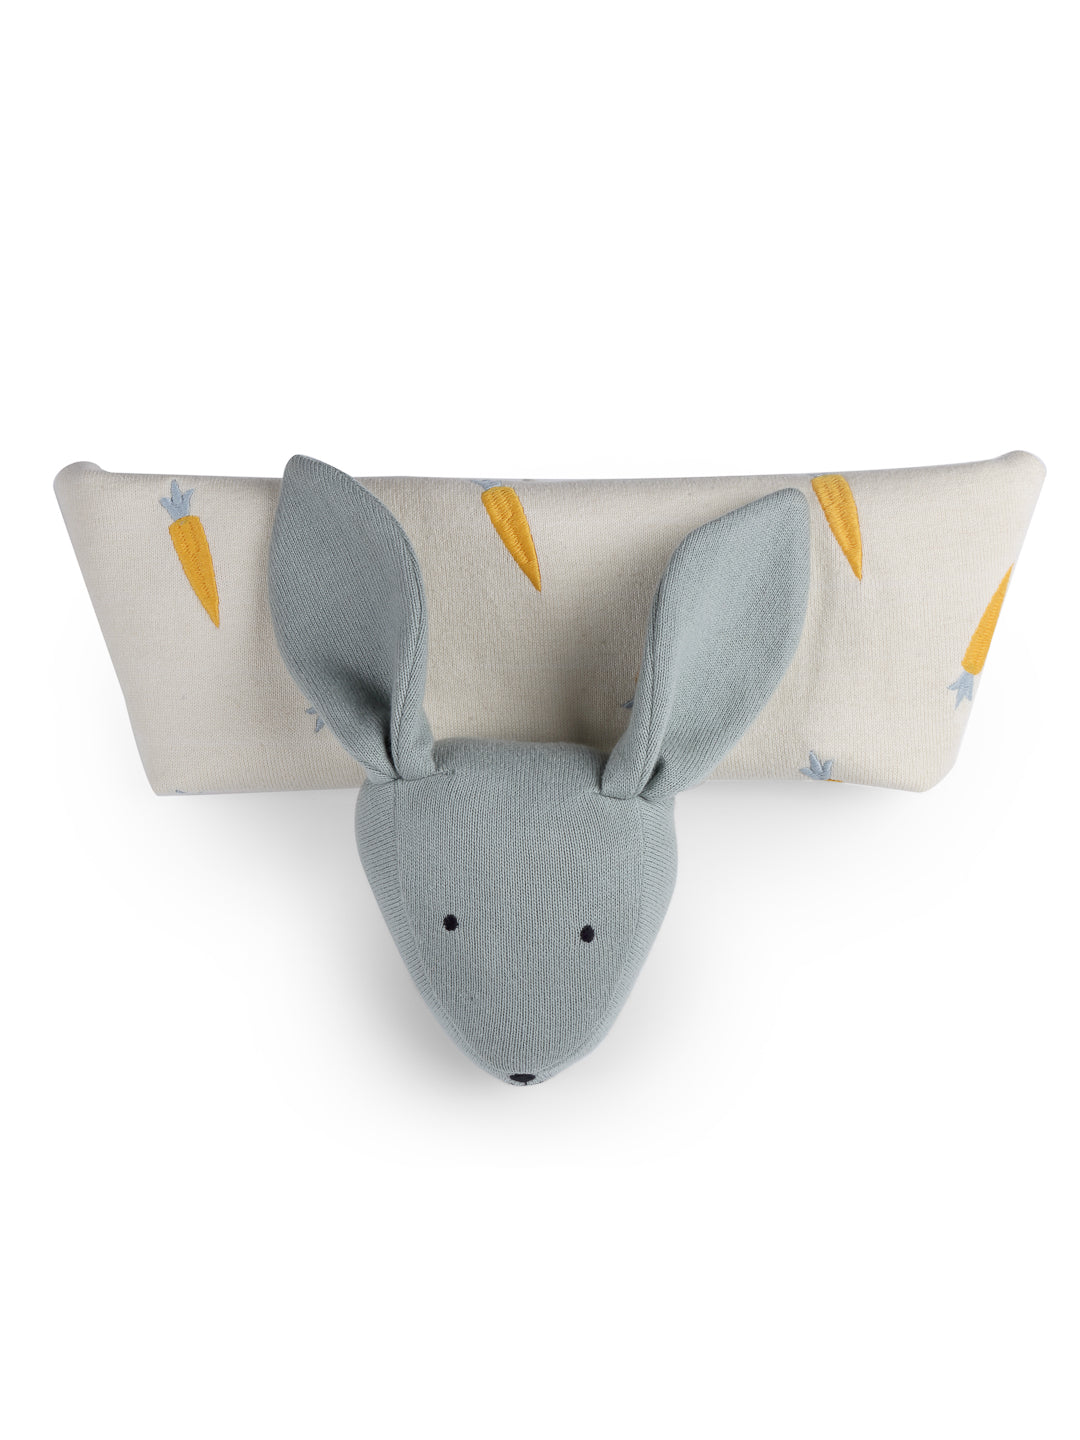 Rabbit Baby Comforter, Soft Toy